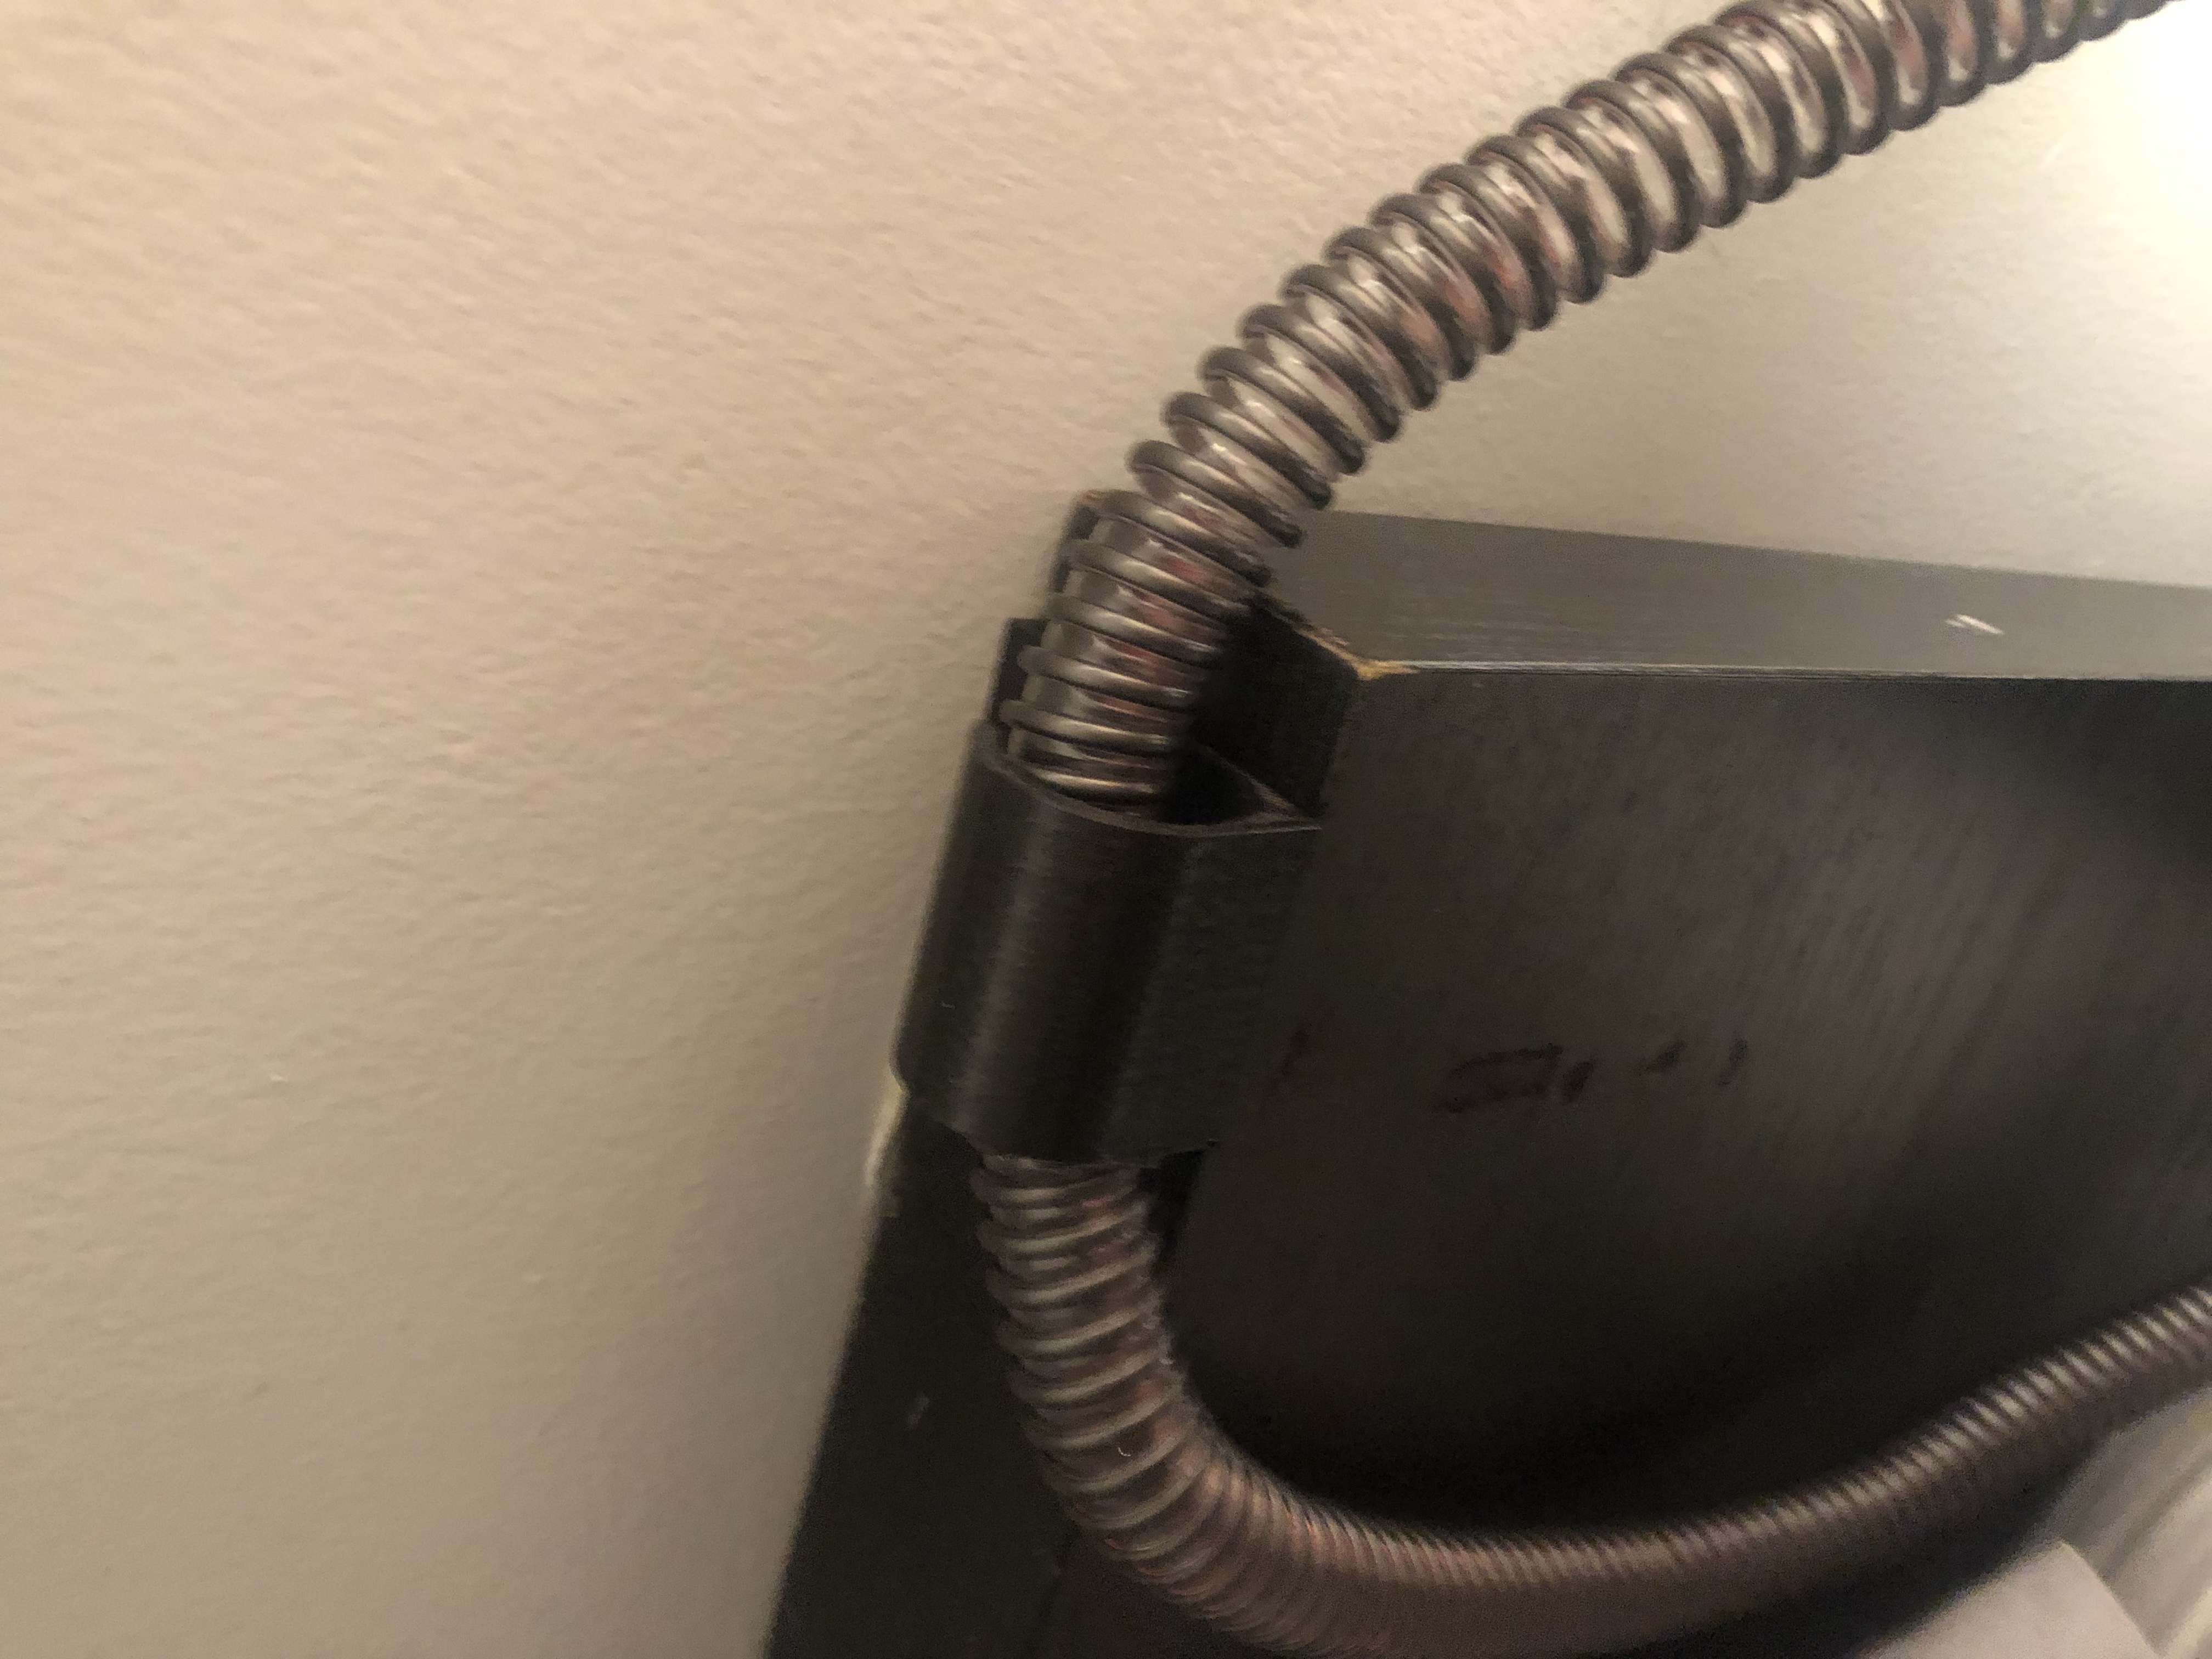 IKEA Malm Headboard CPAP hose holder